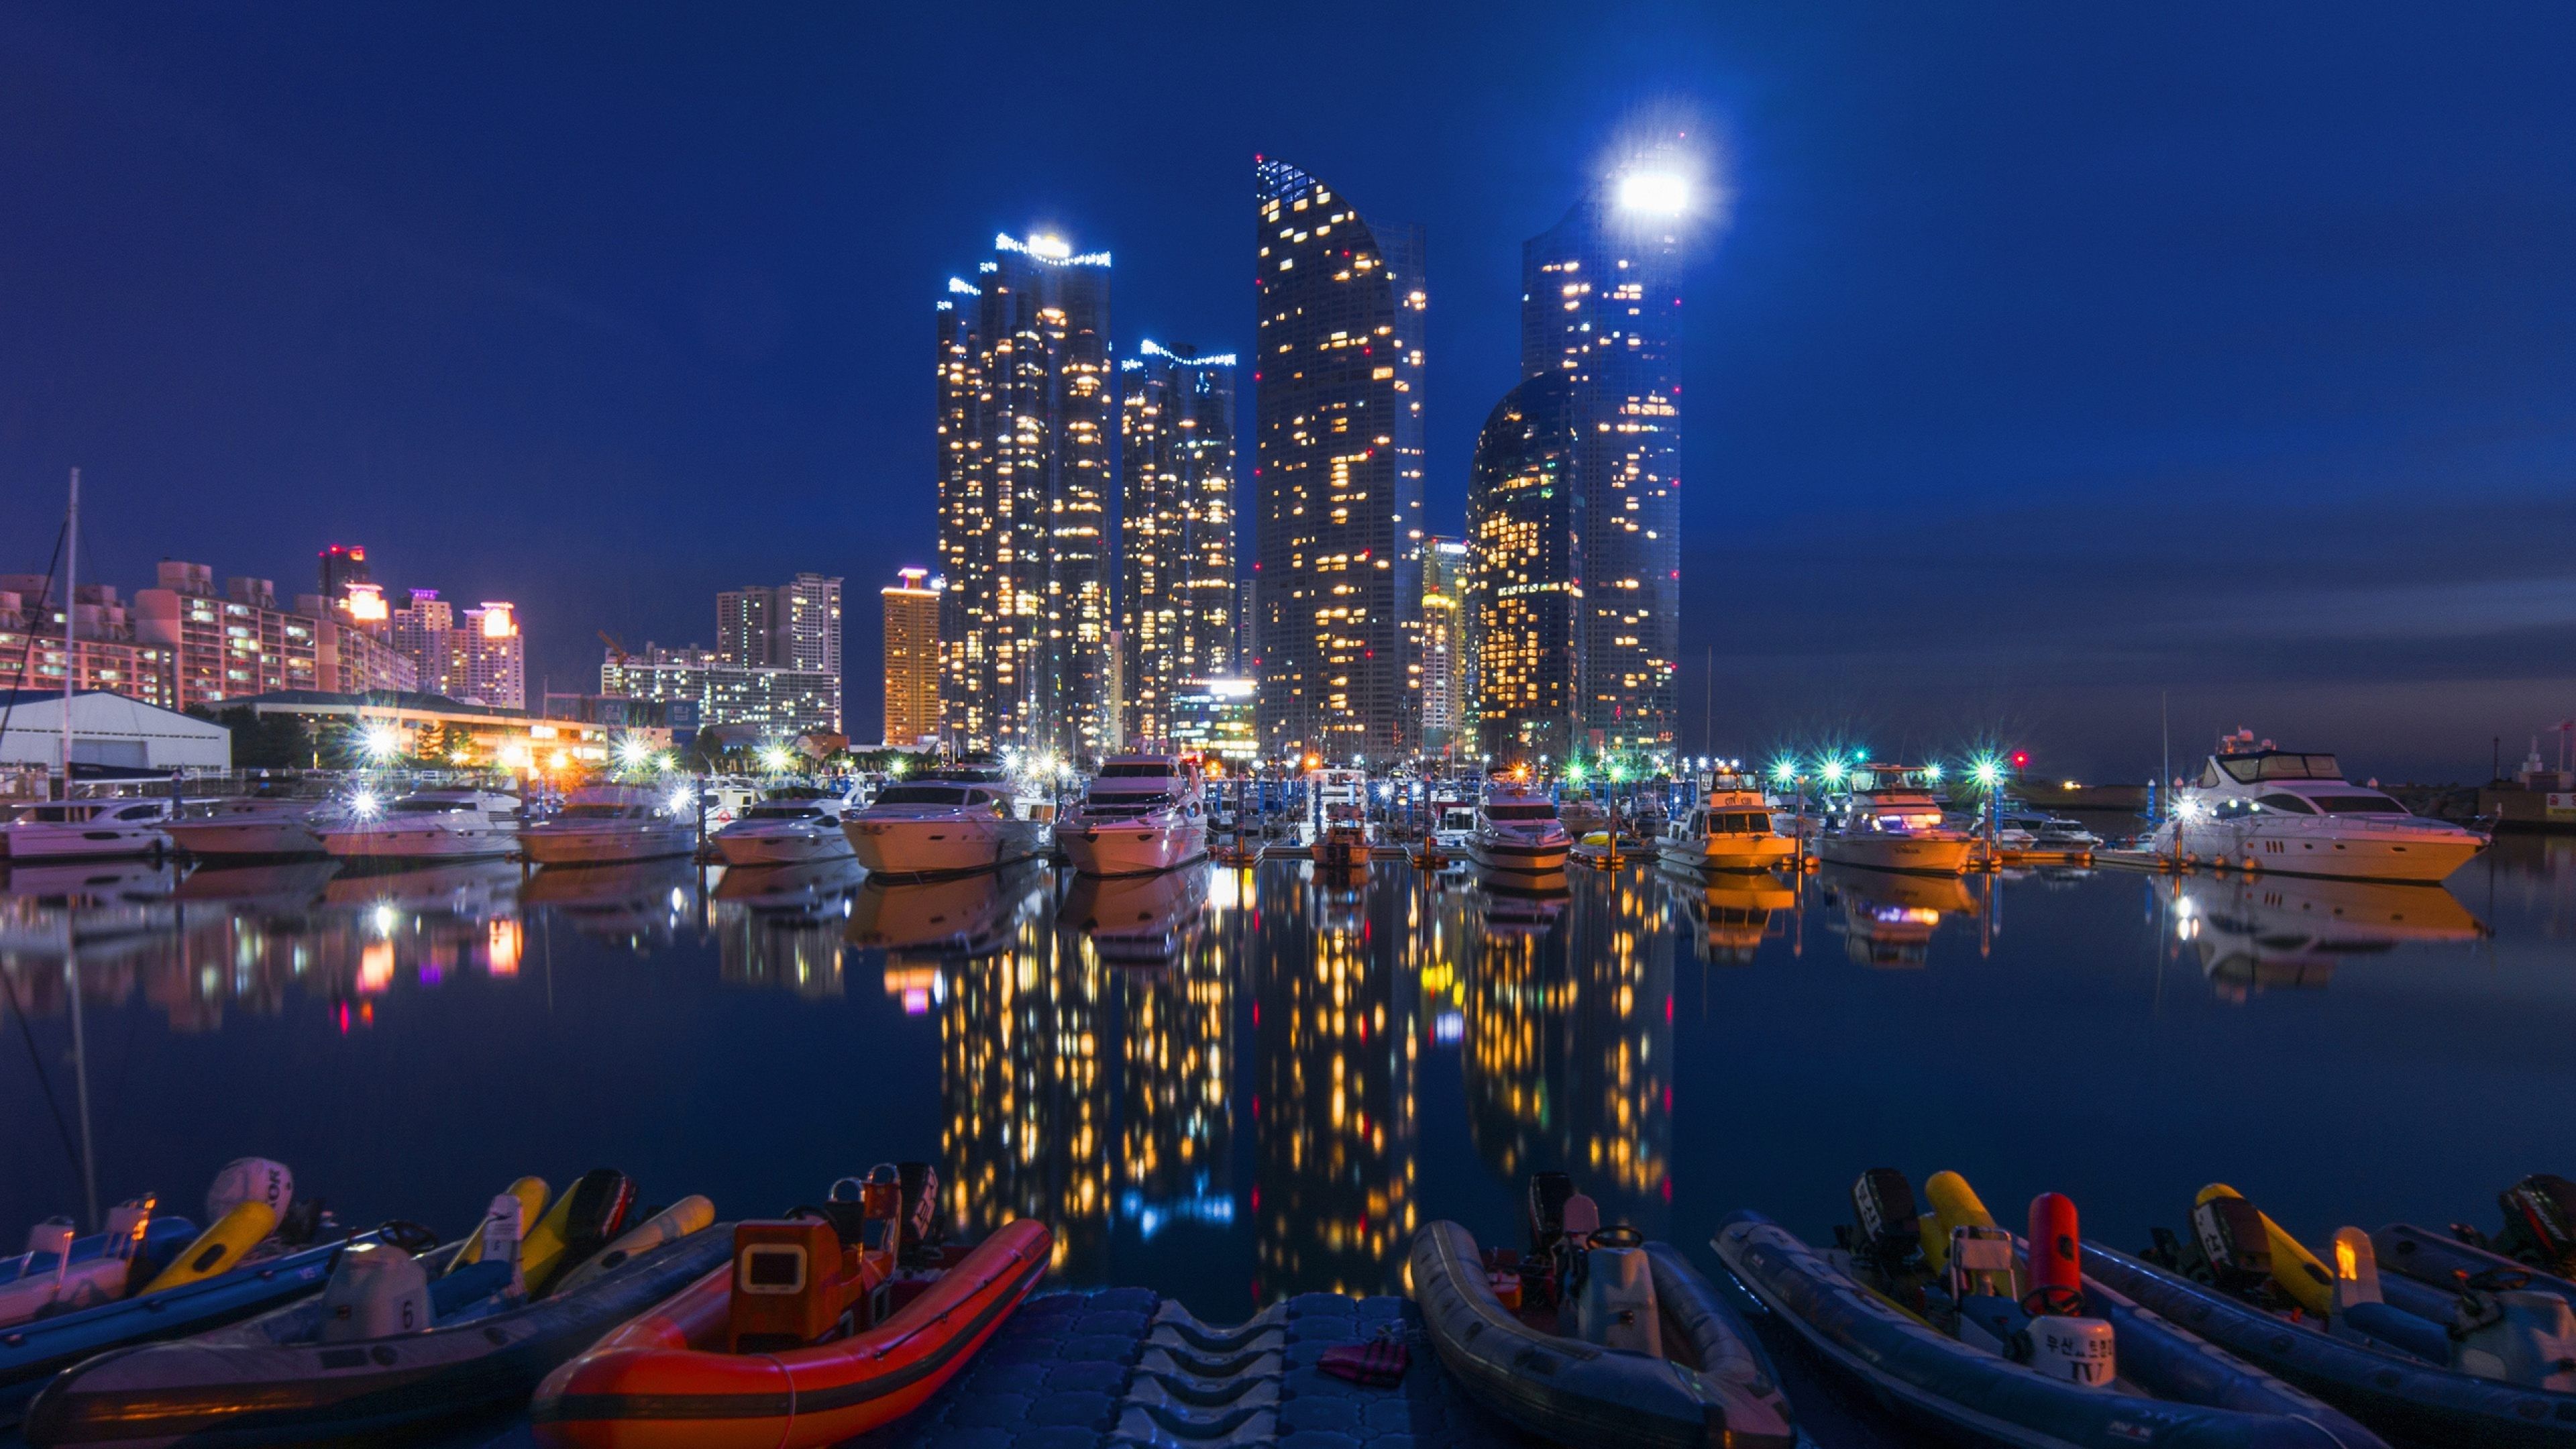 Night City Buildings And Boats 4k Ultra HD Wallpaper Ololoshenka